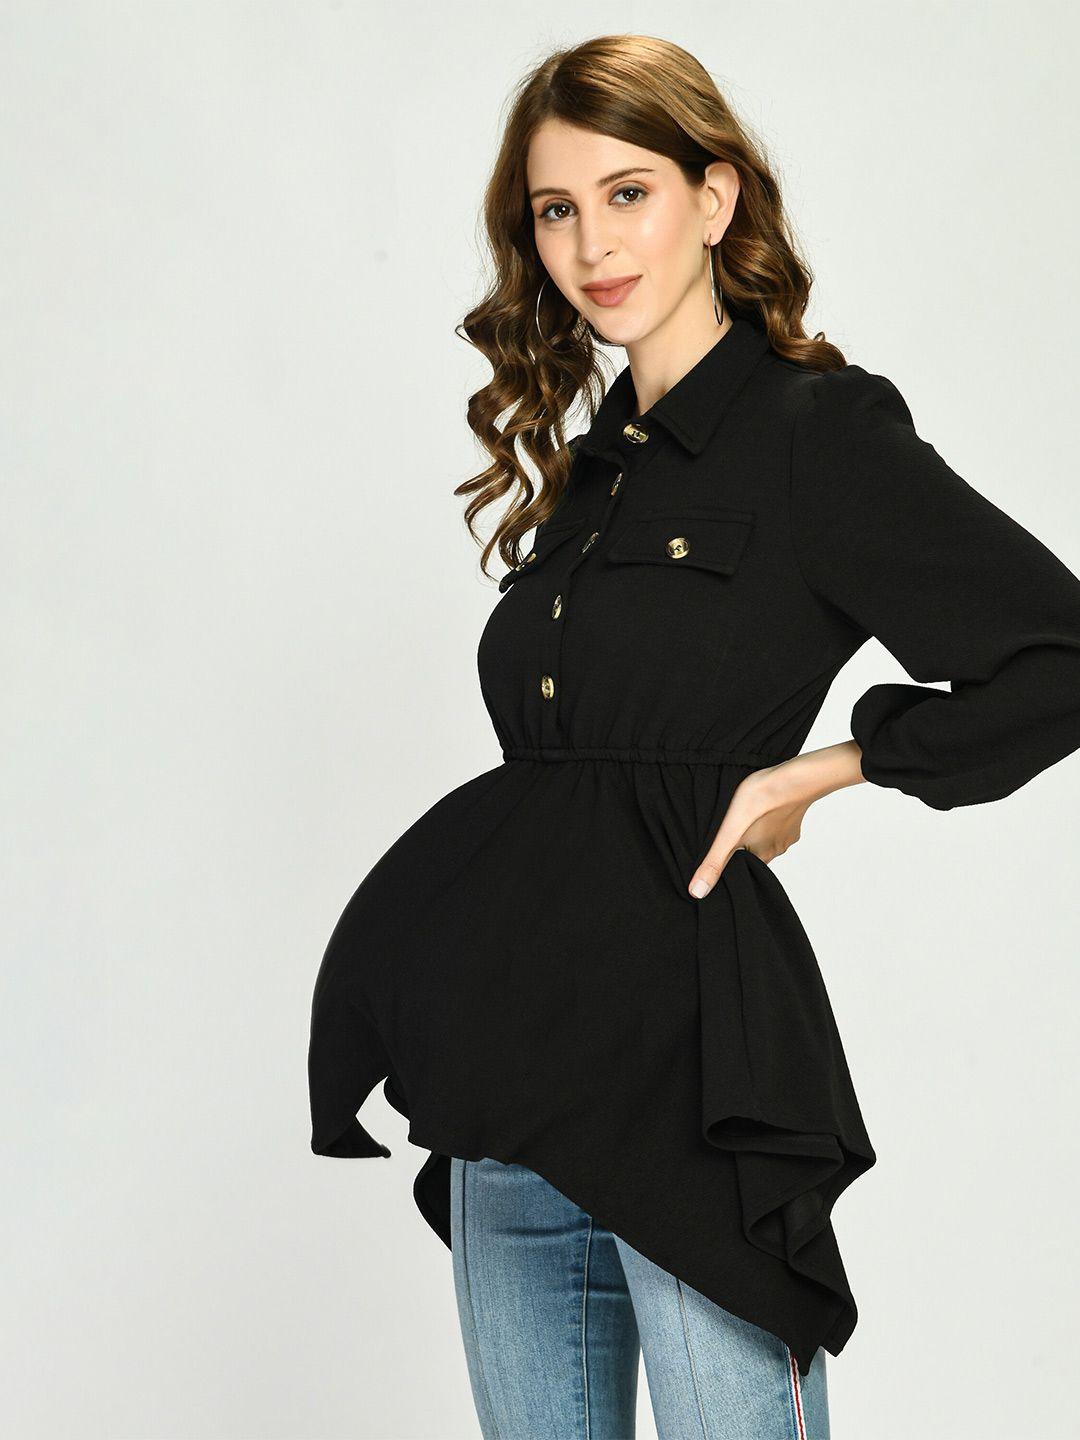 iuga women maternity shirt style longline top